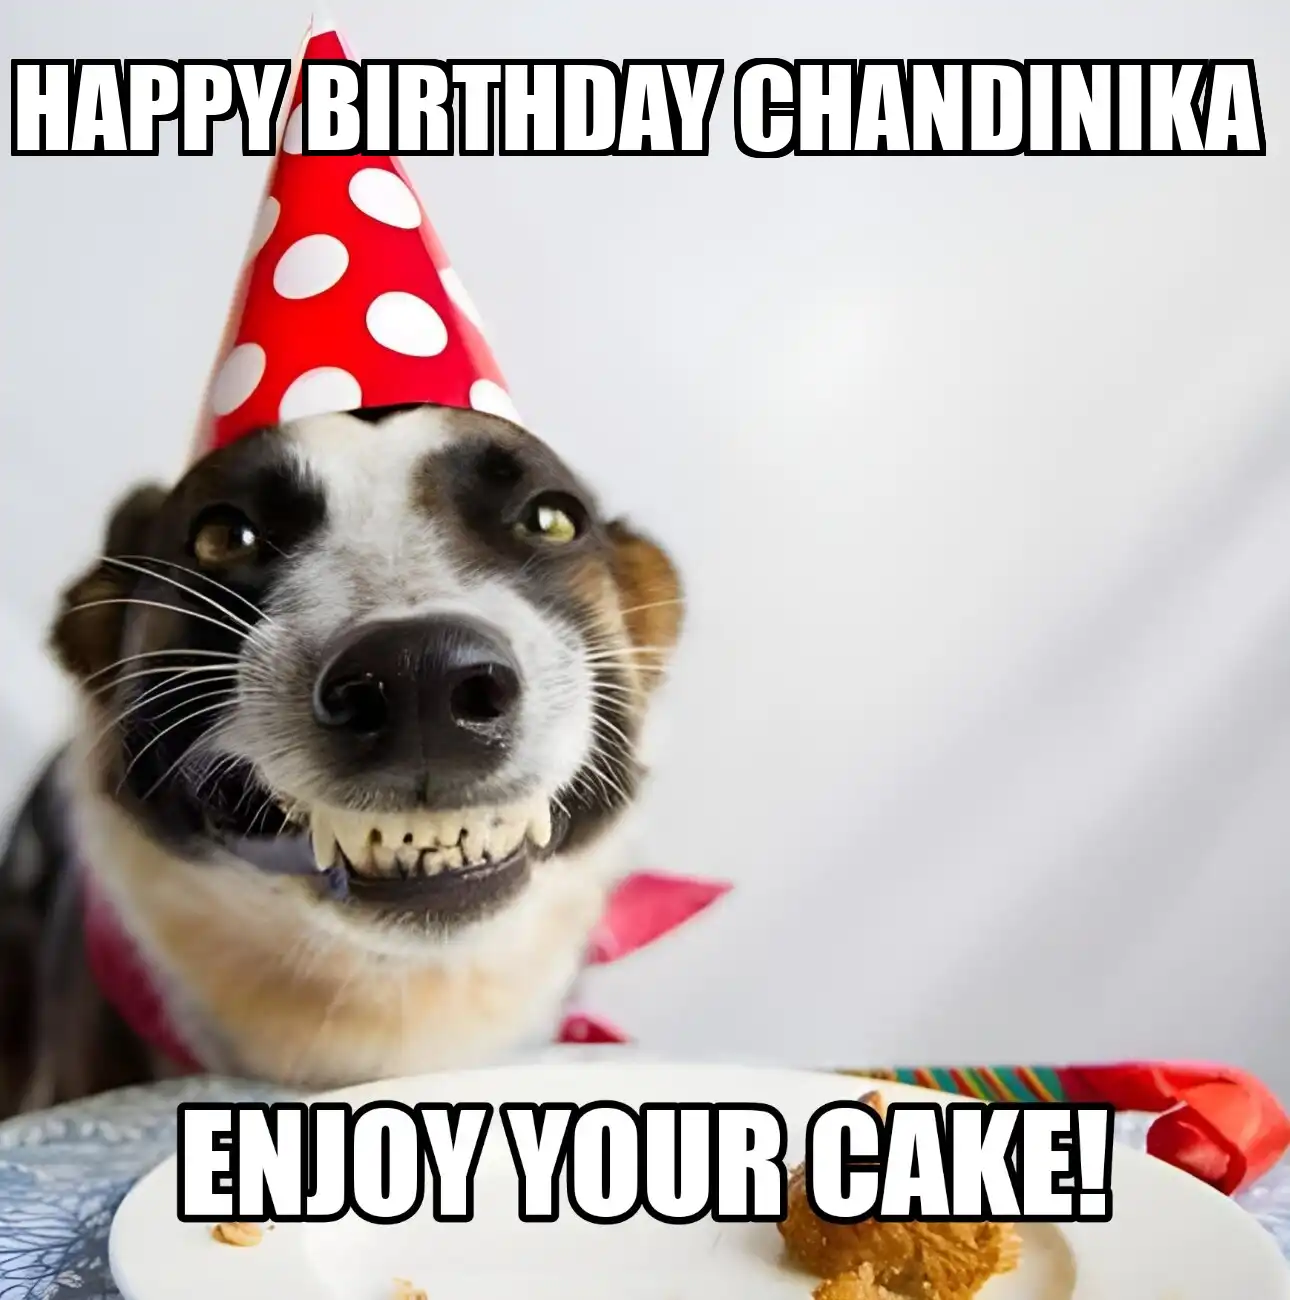 Happy Birthday Chandinika Enjoy Your Cake Dog Meme